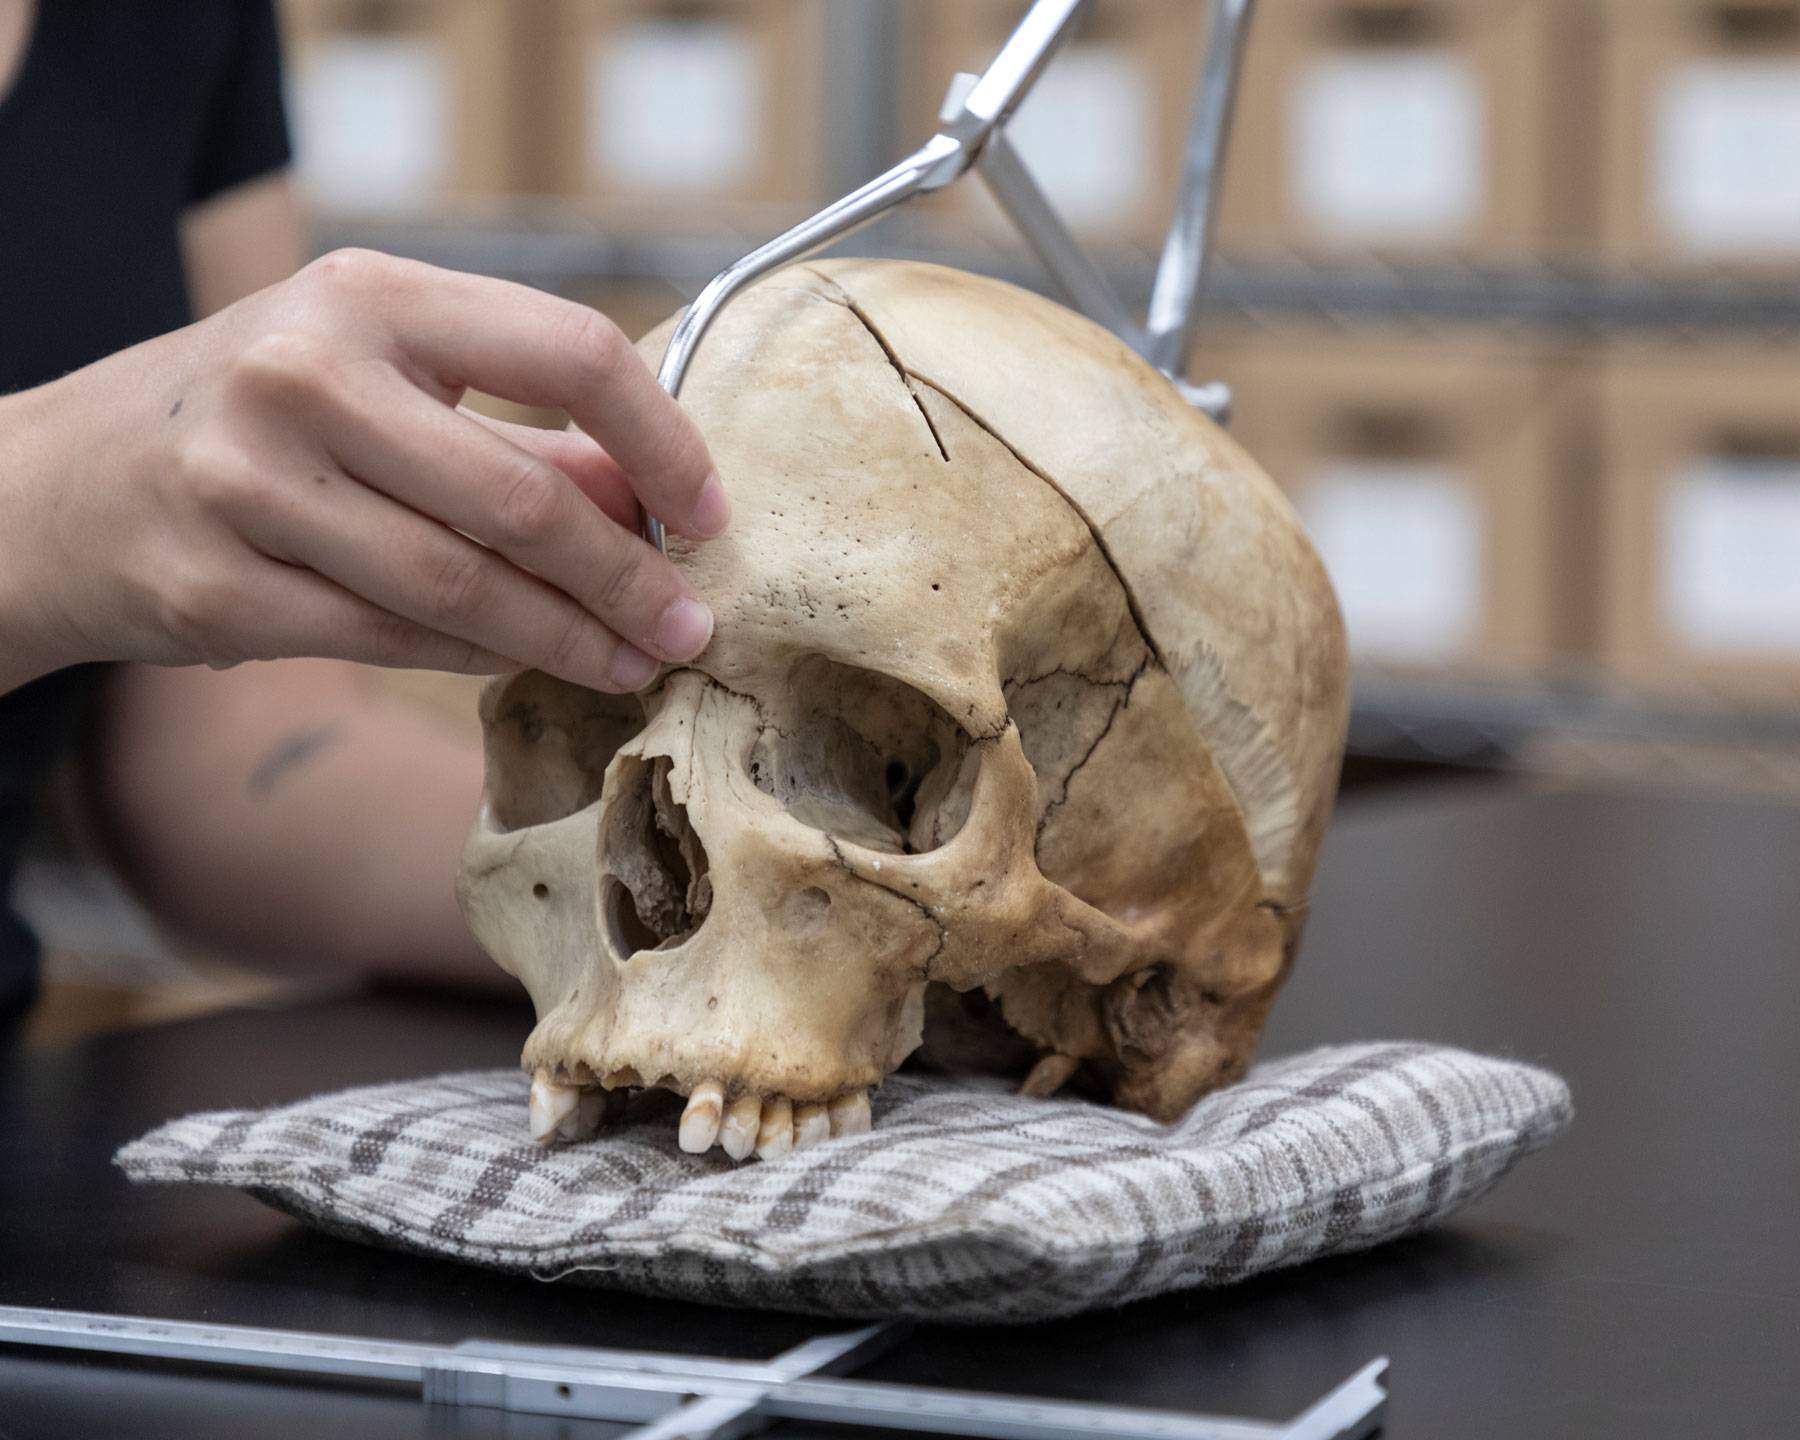 Veltri measures a human skull